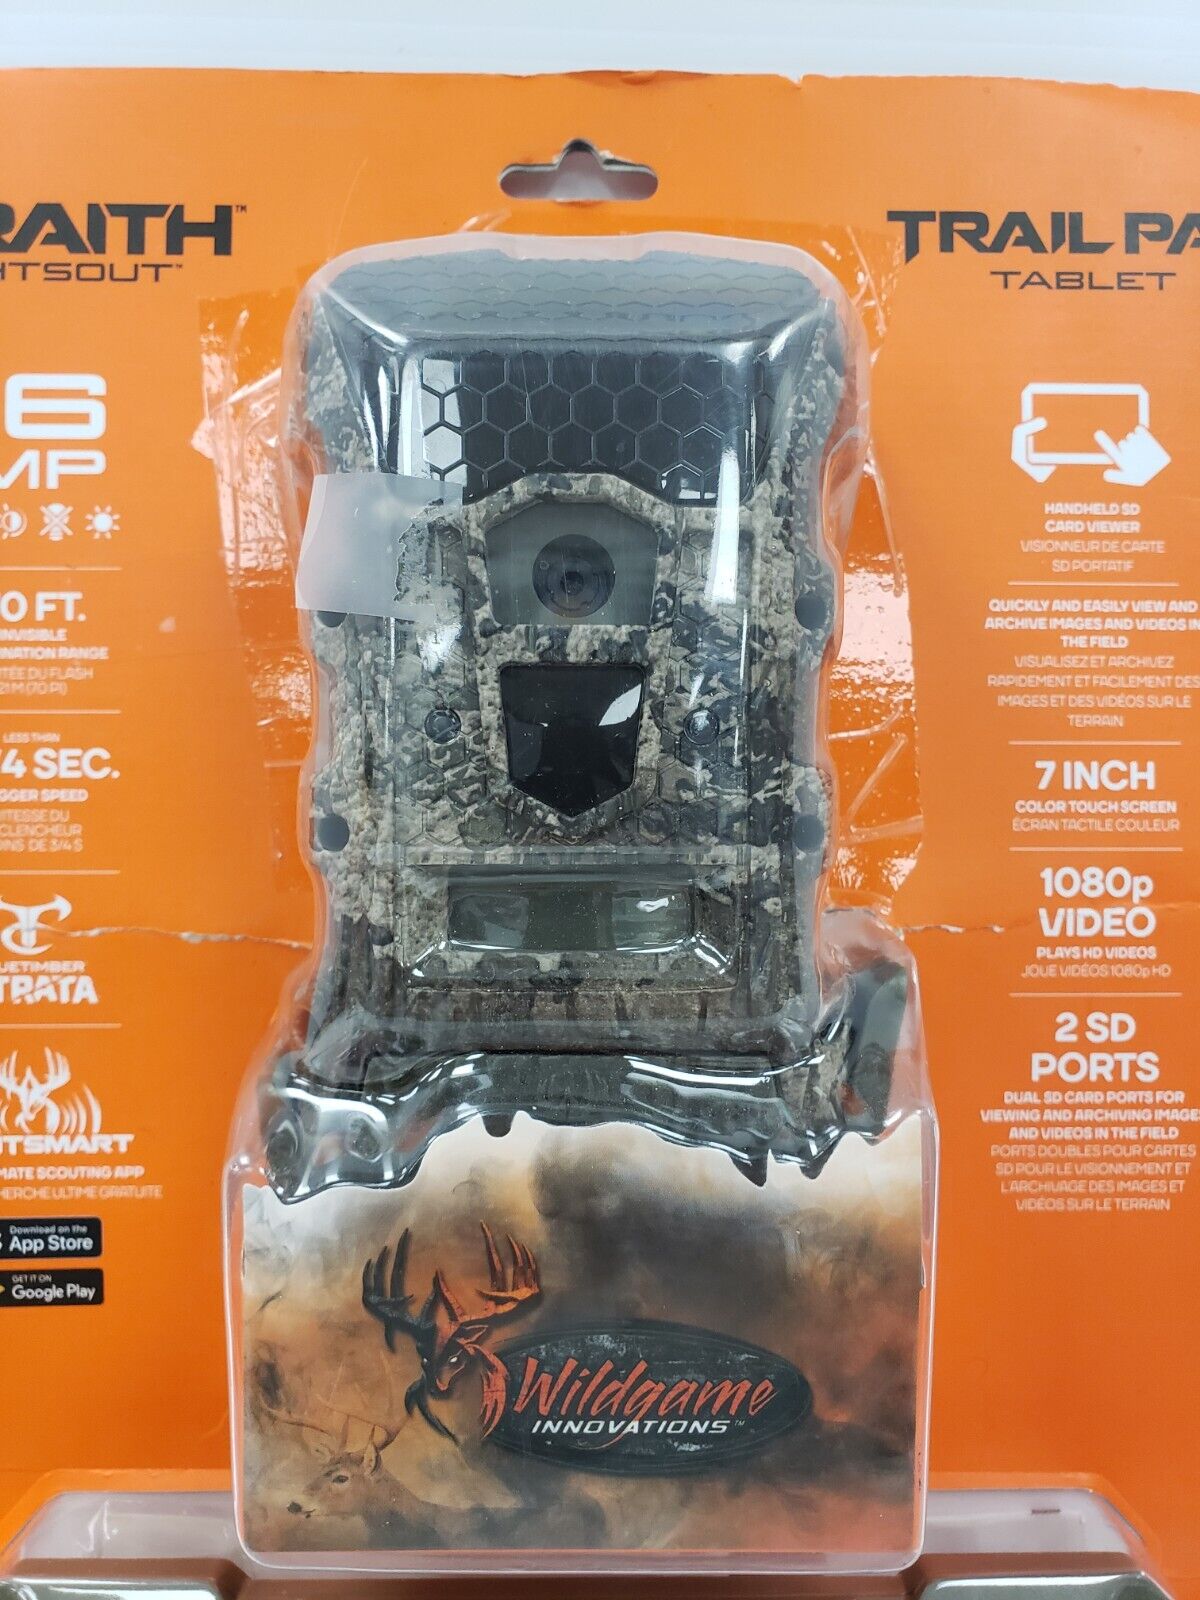 (I-32336) Wildgame Wraith Lightsout Trail Cam